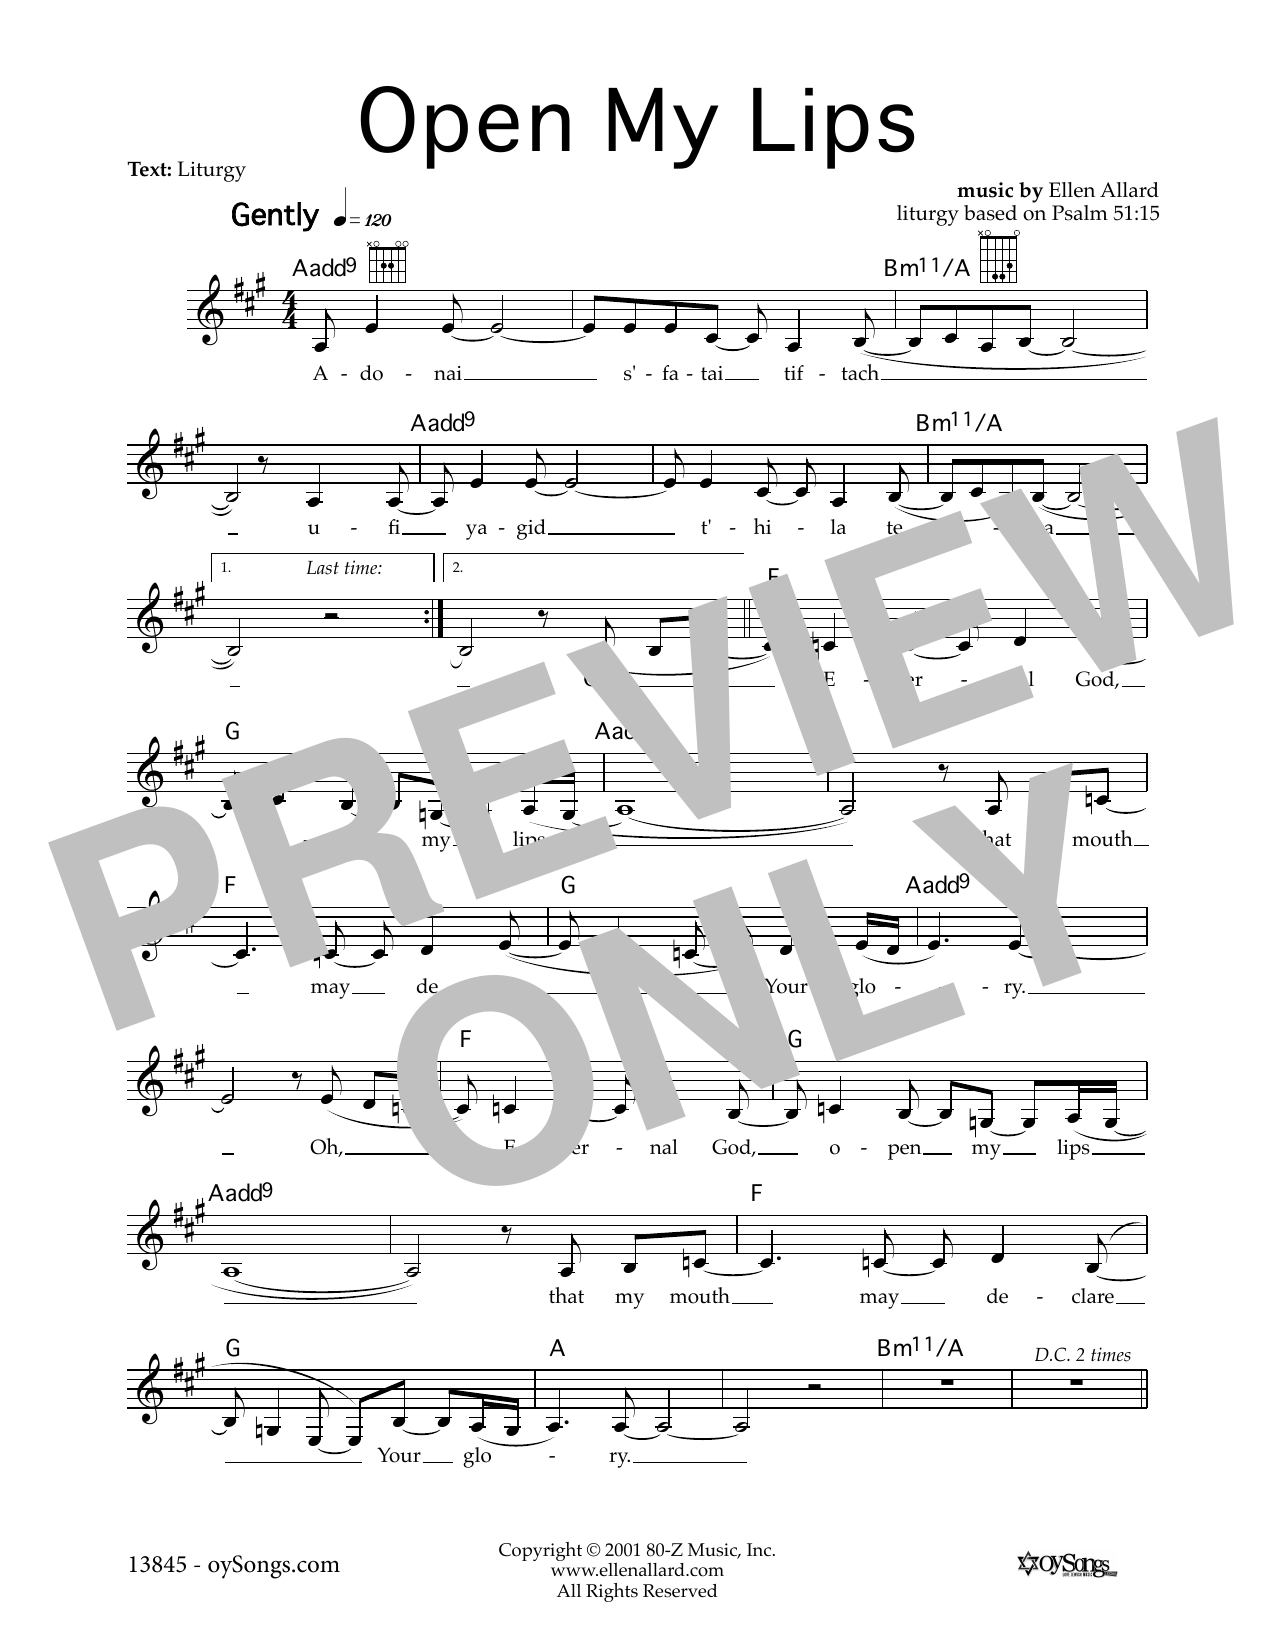 Ellen Allard Open My Lips Sheet Music Notes & Chords for Melody Line, Lyrics & Chords - Download or Print PDF